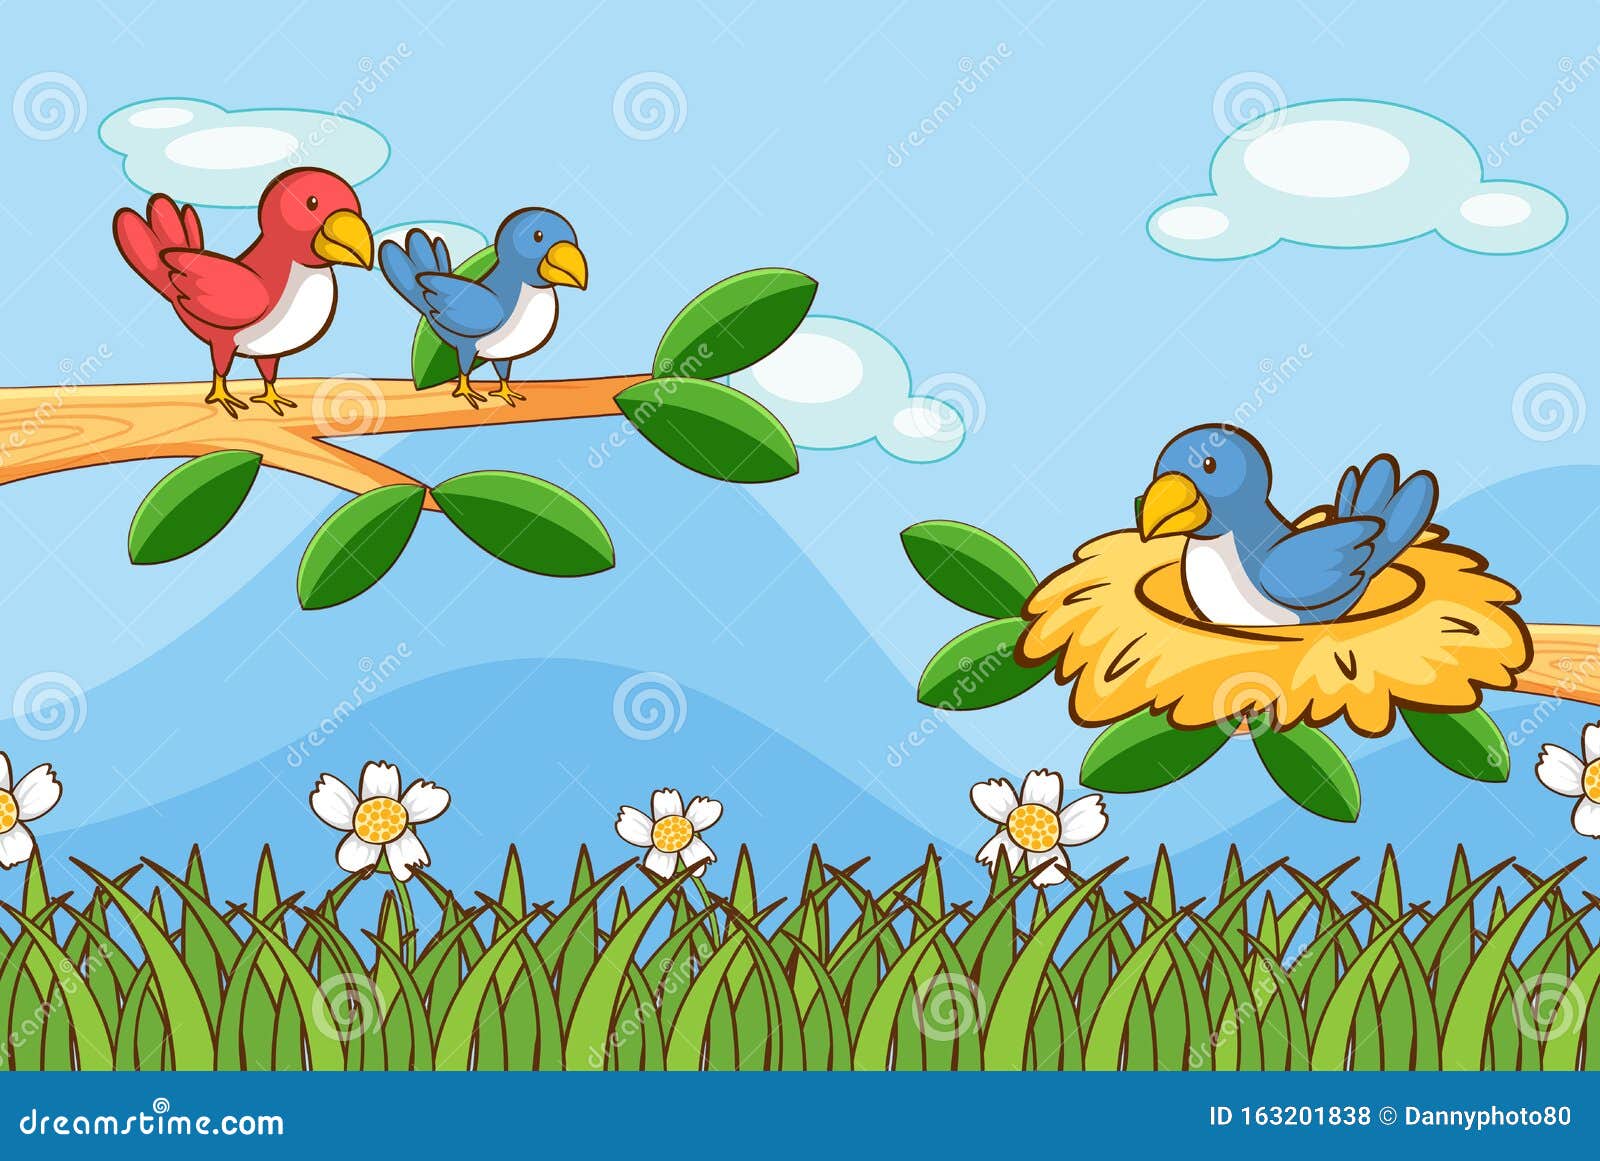 Scene with birds in garden stock illustration. Illustration of scene ...